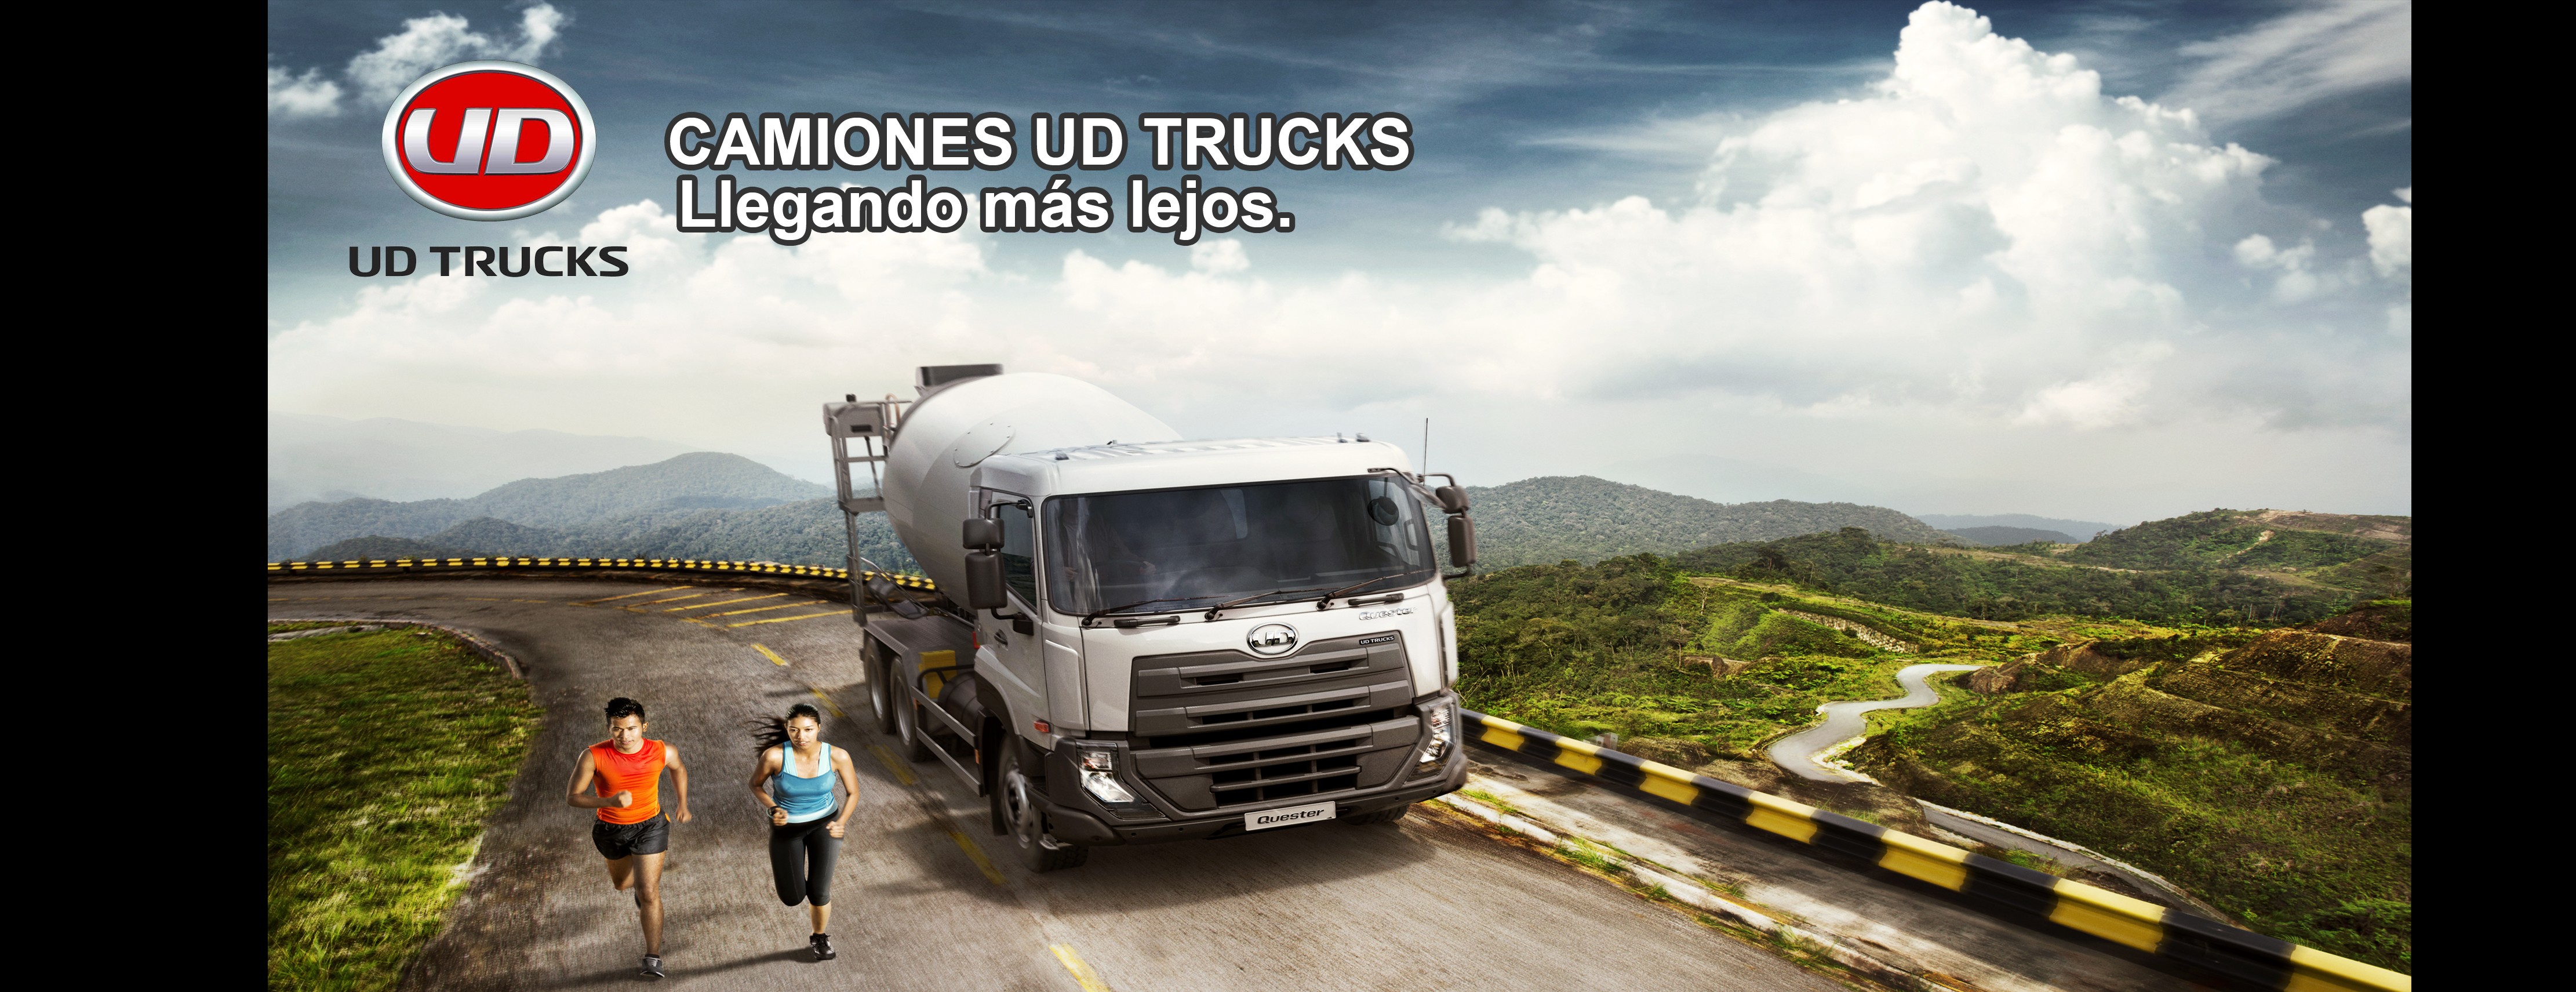 Banner Camiones UD.jpg